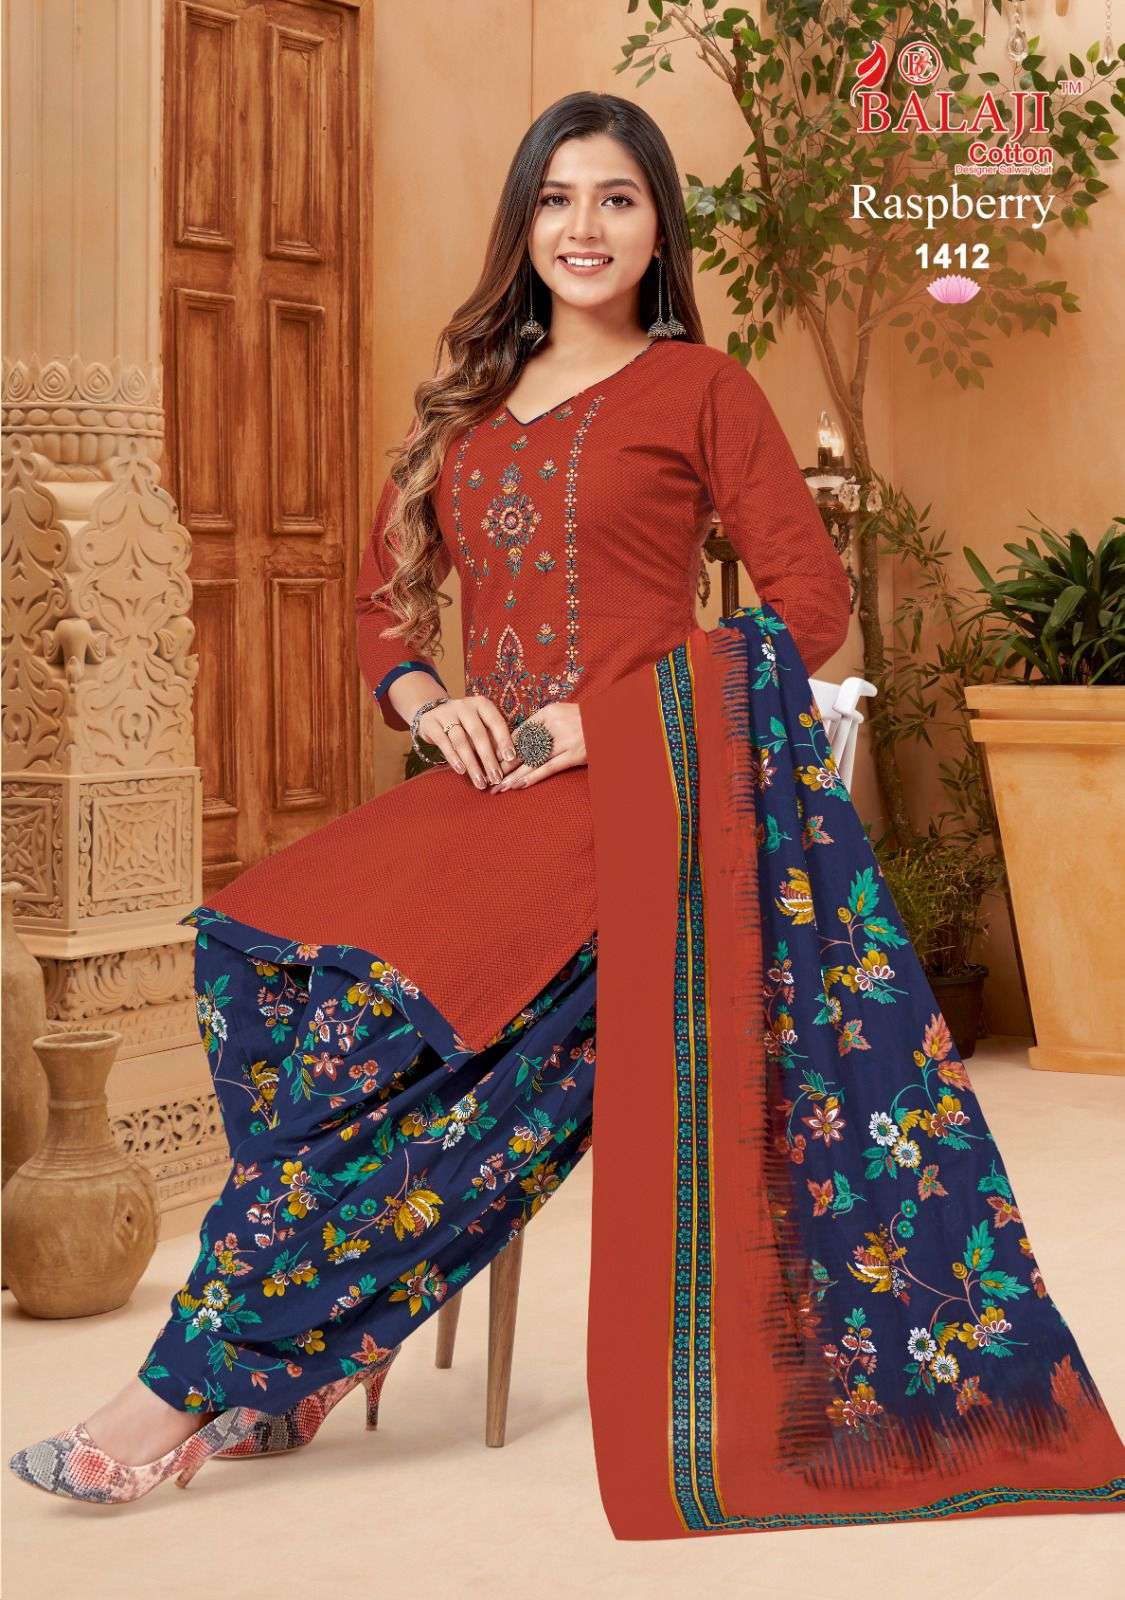 Raspberry Vol 14 Buy Balaji Cotton Wholesale Lowest Price Embroidery Salwar Suit Sets